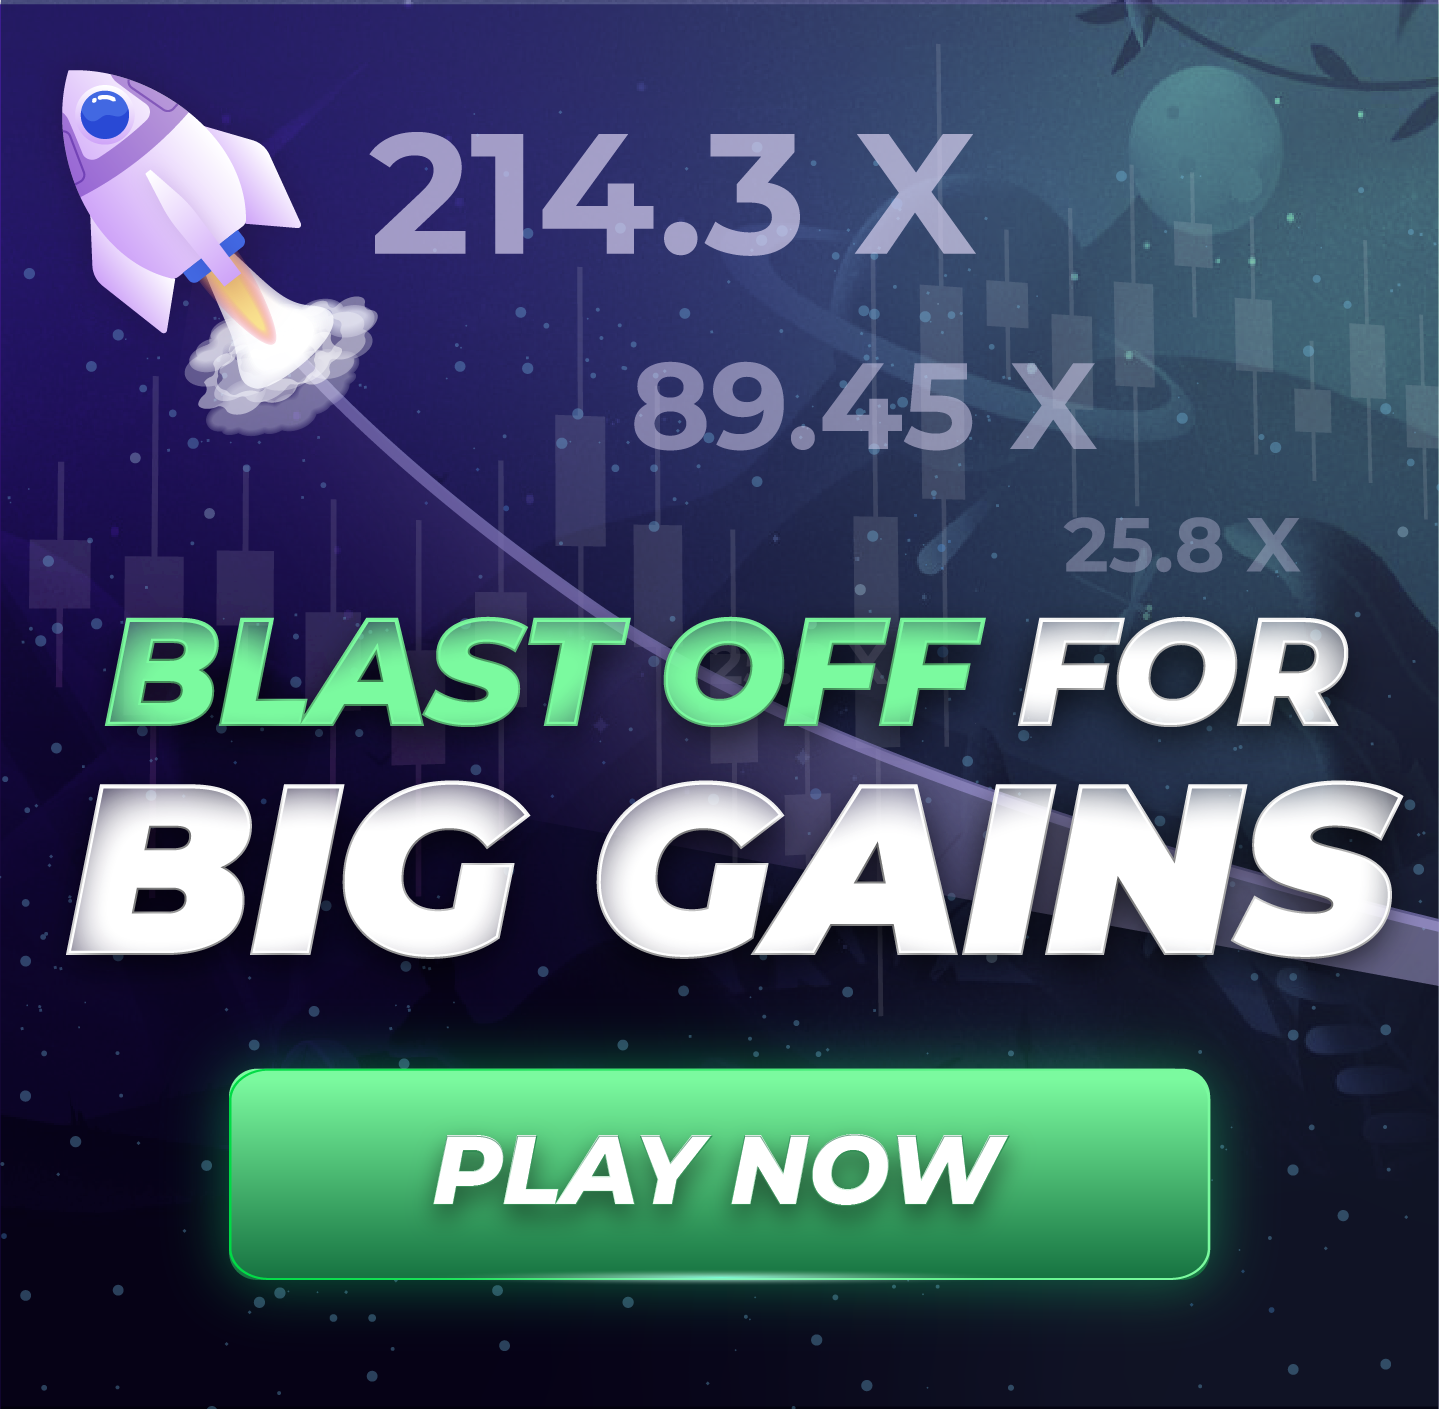 Blast off for big gains